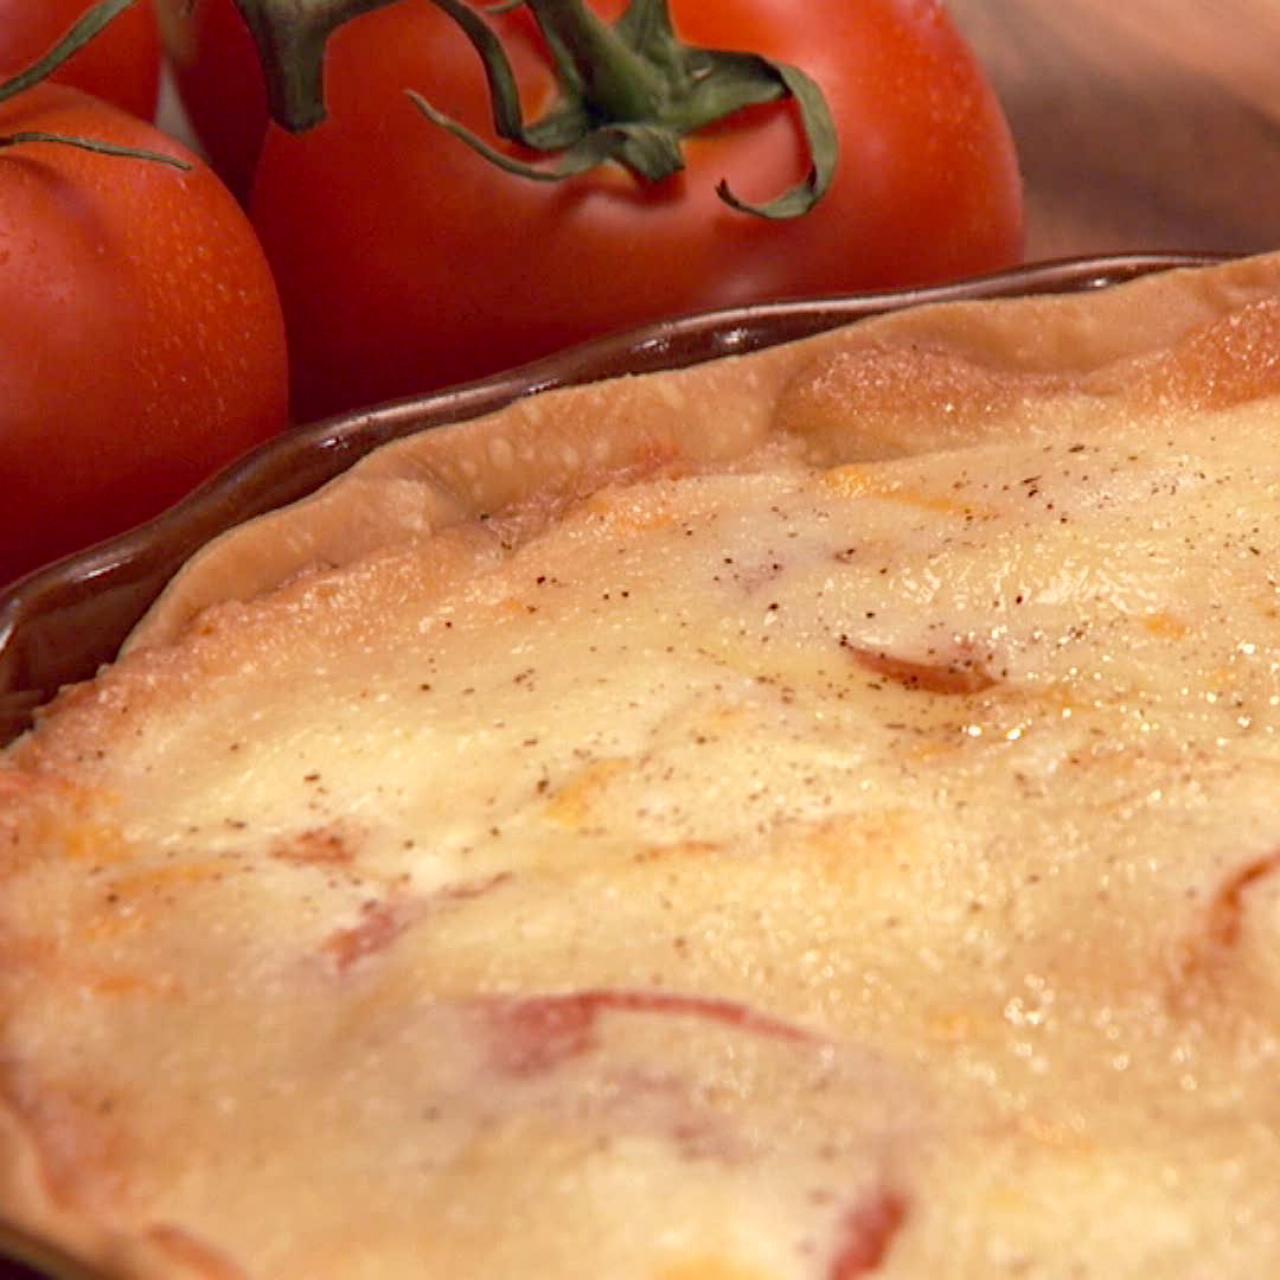 Easy Tomato Pie Recipe, Ree Drummond